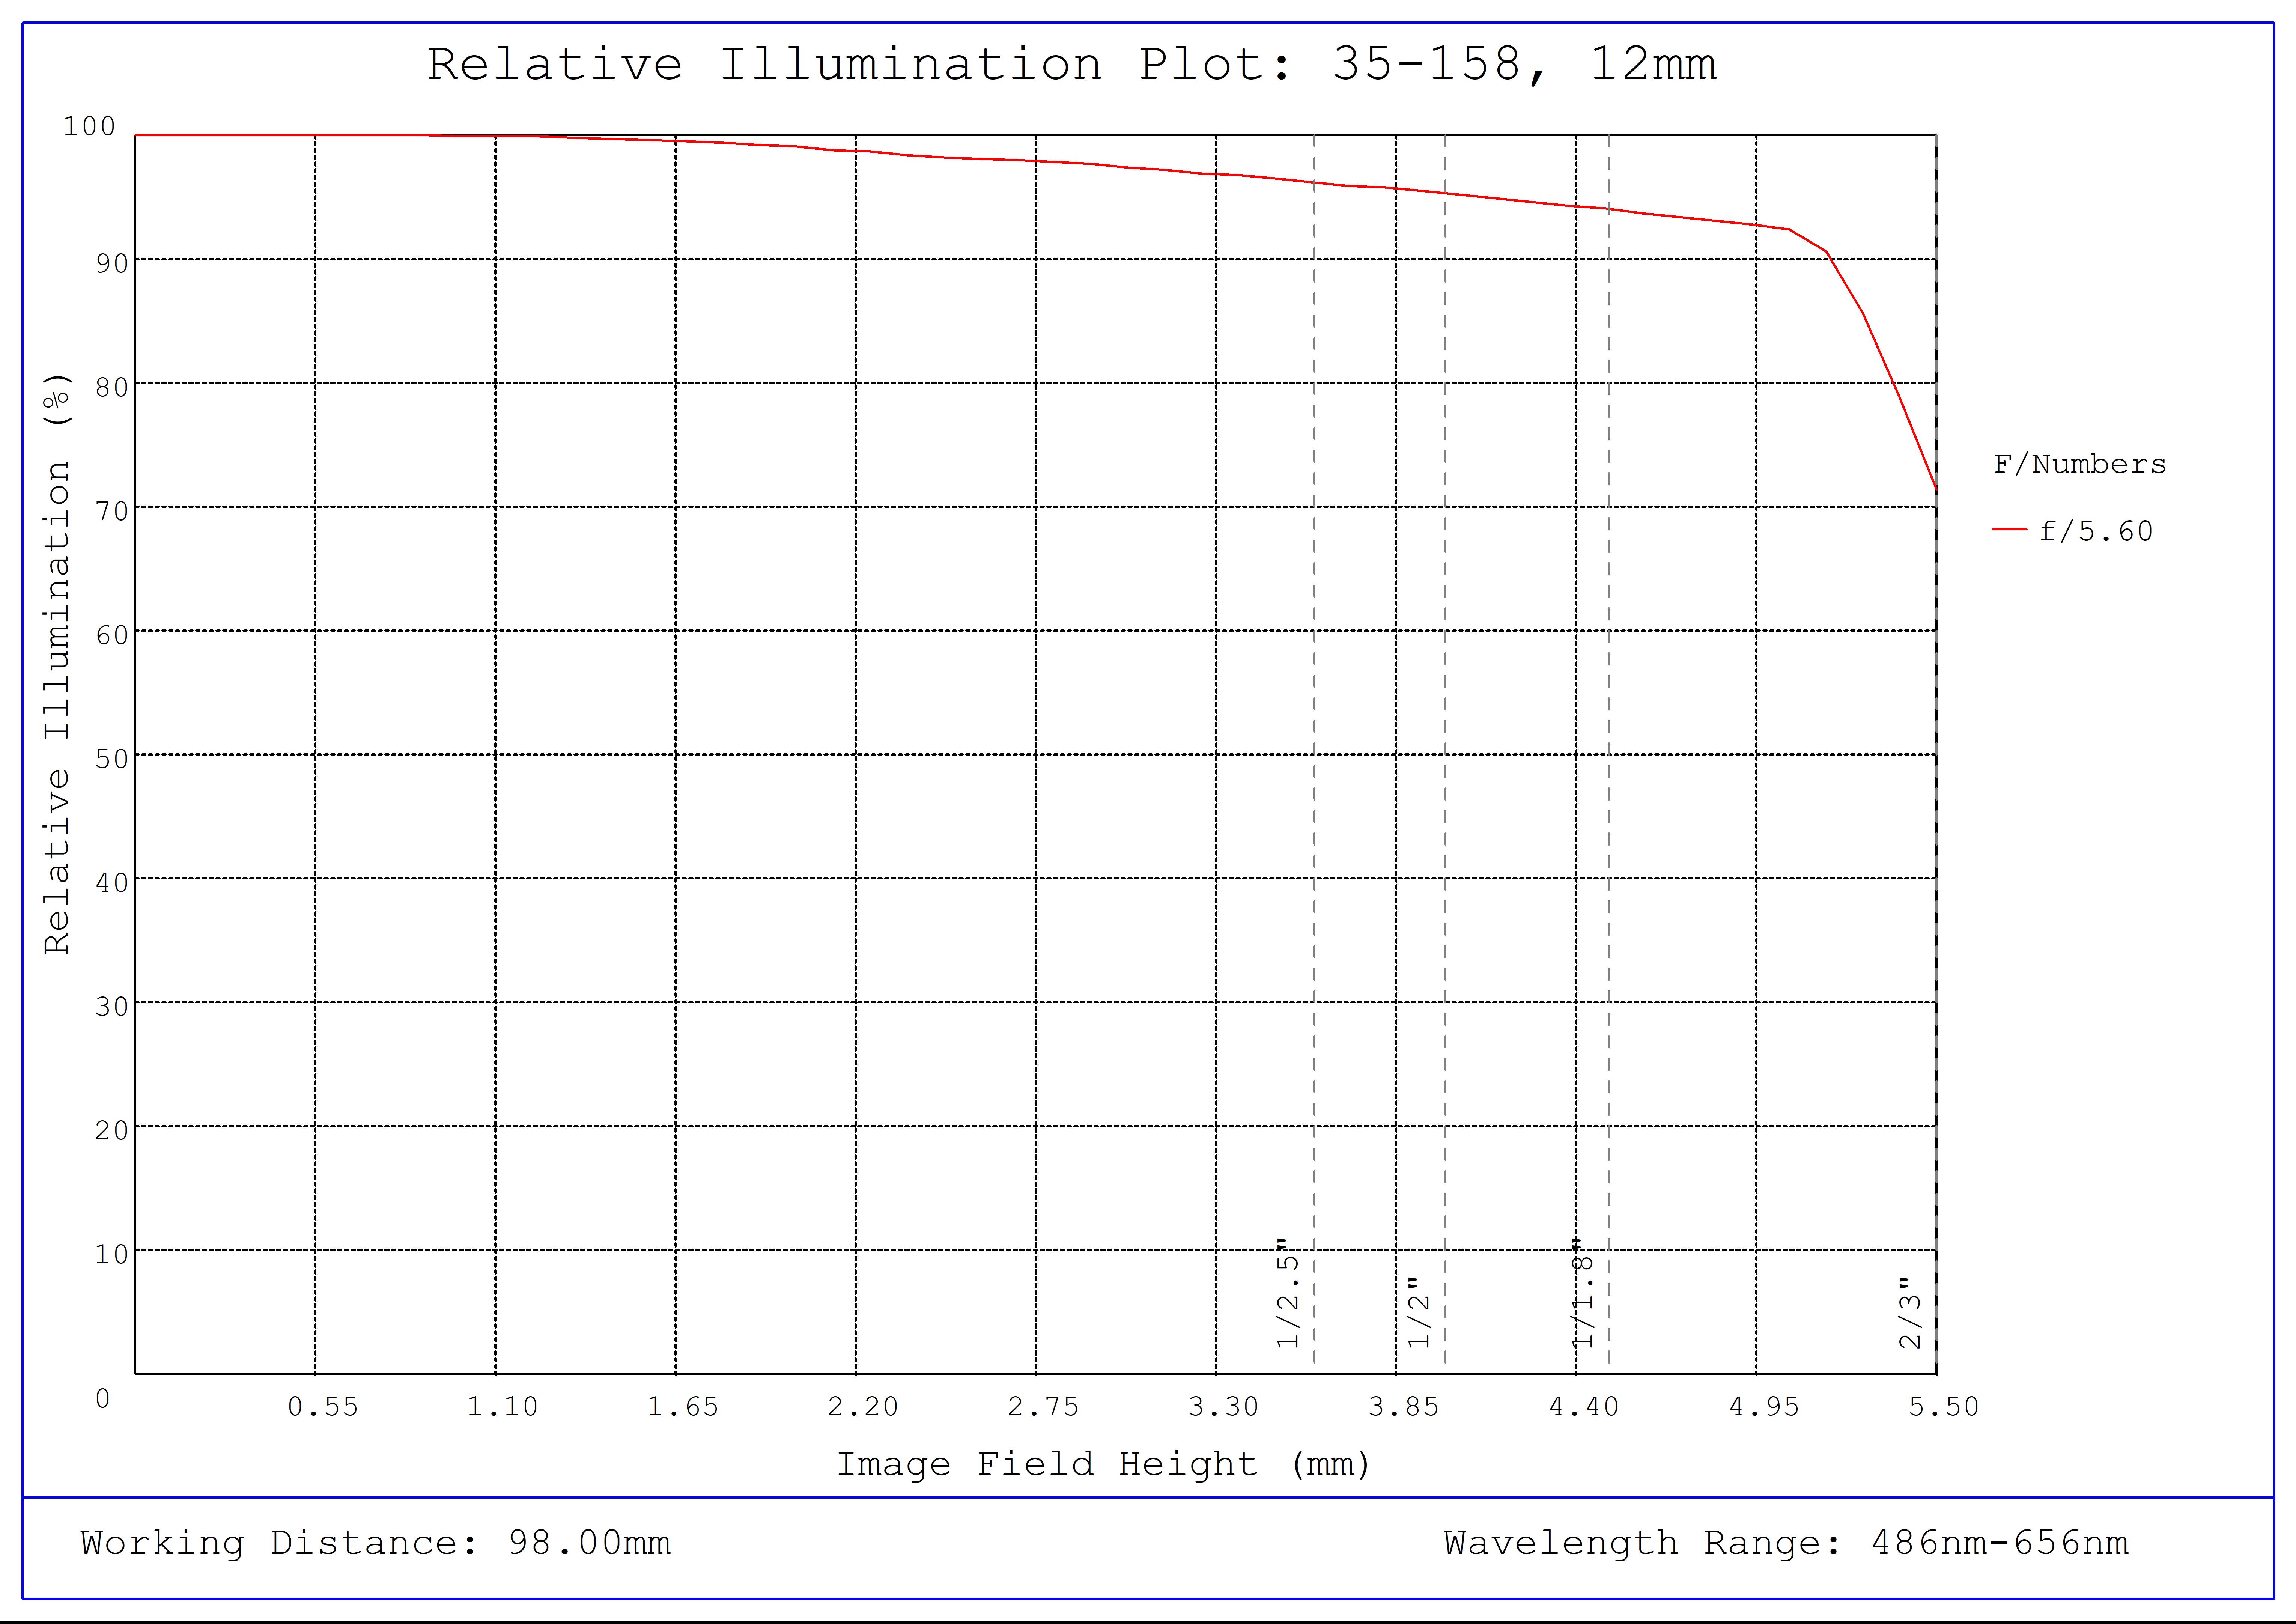 #35-158, 12mm, f/5.6 Cr Series Fixed Focal Length Lens, Relative Illumination Plot